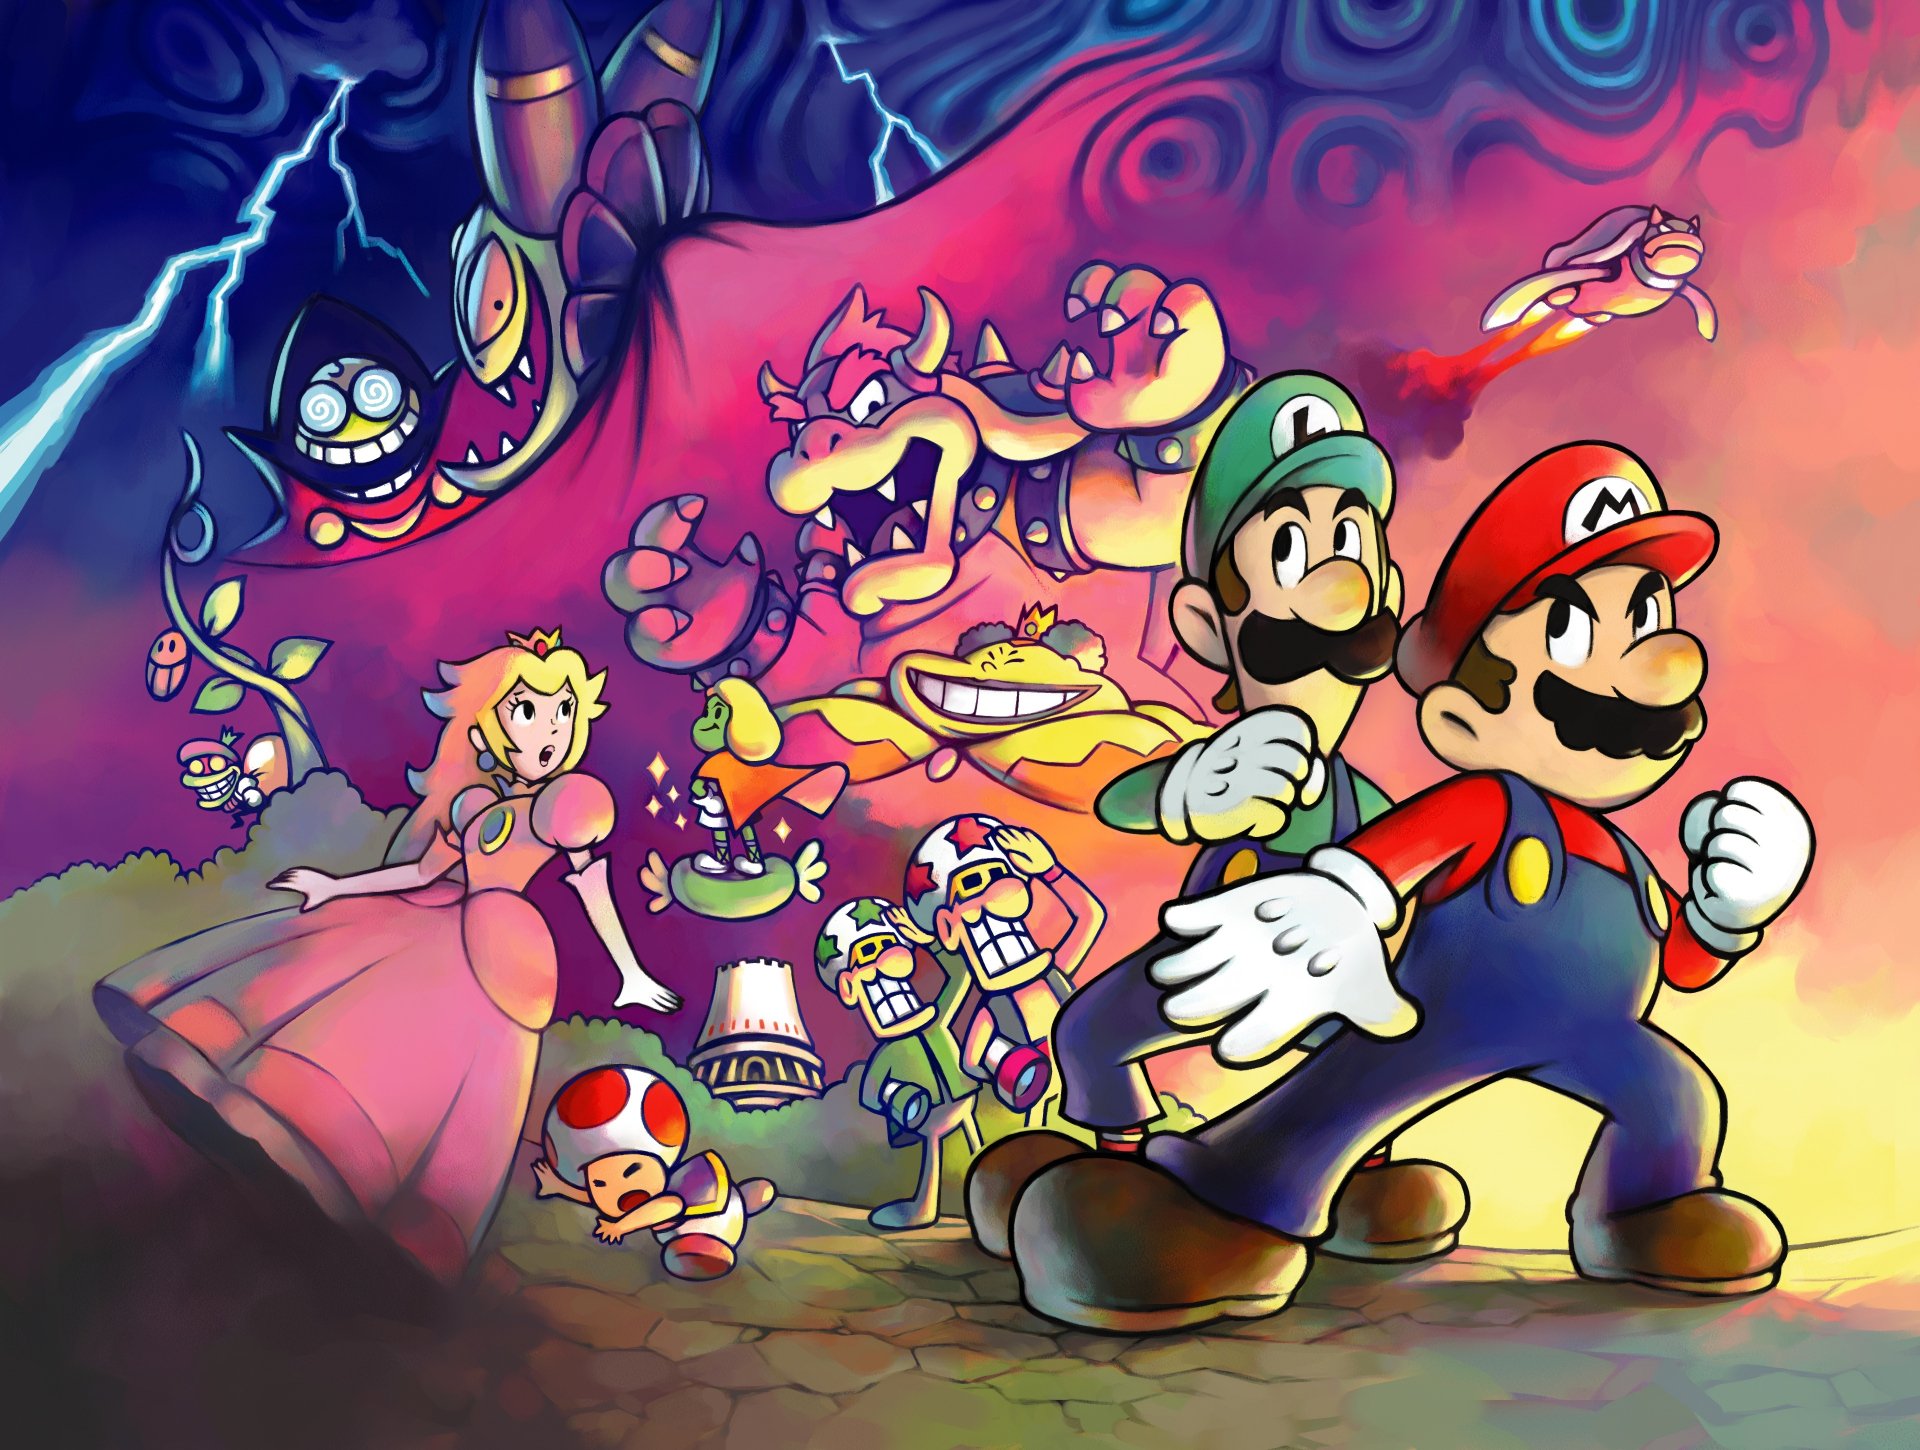 Mario and Luigi wallpaper by gabriel12cfg  Download on ZEDGE  33b9